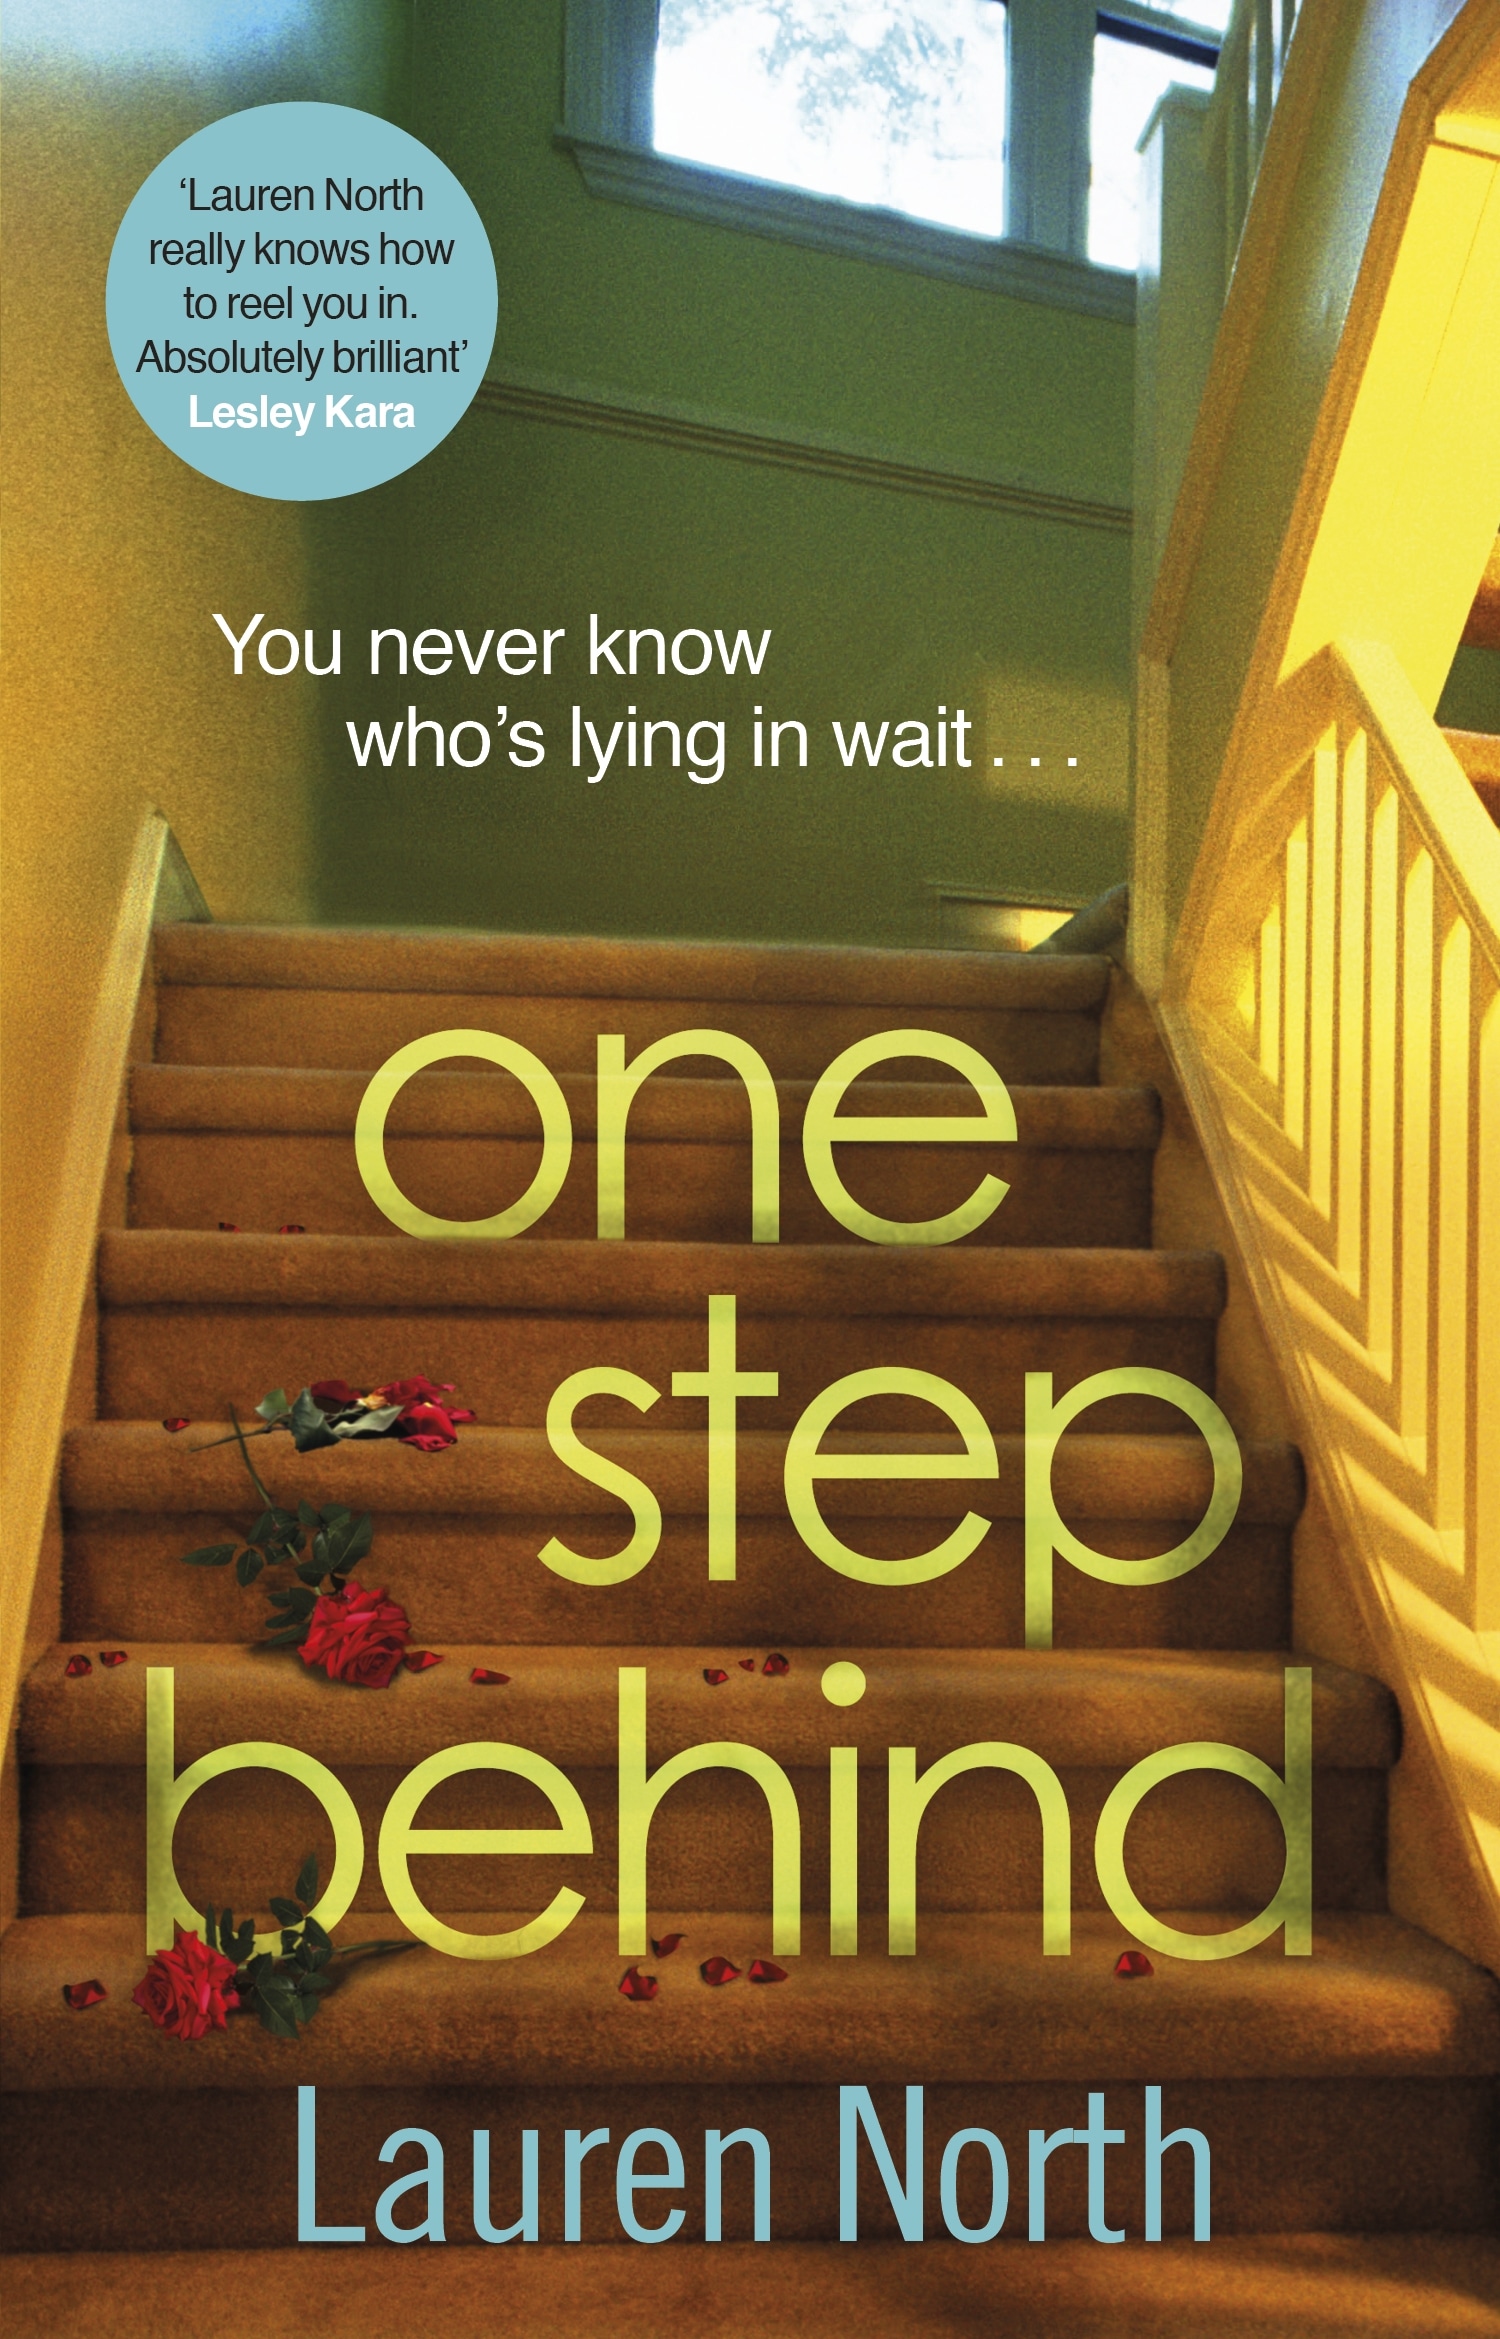 Book “One Step Behind” by Lauren North — September 3, 2020